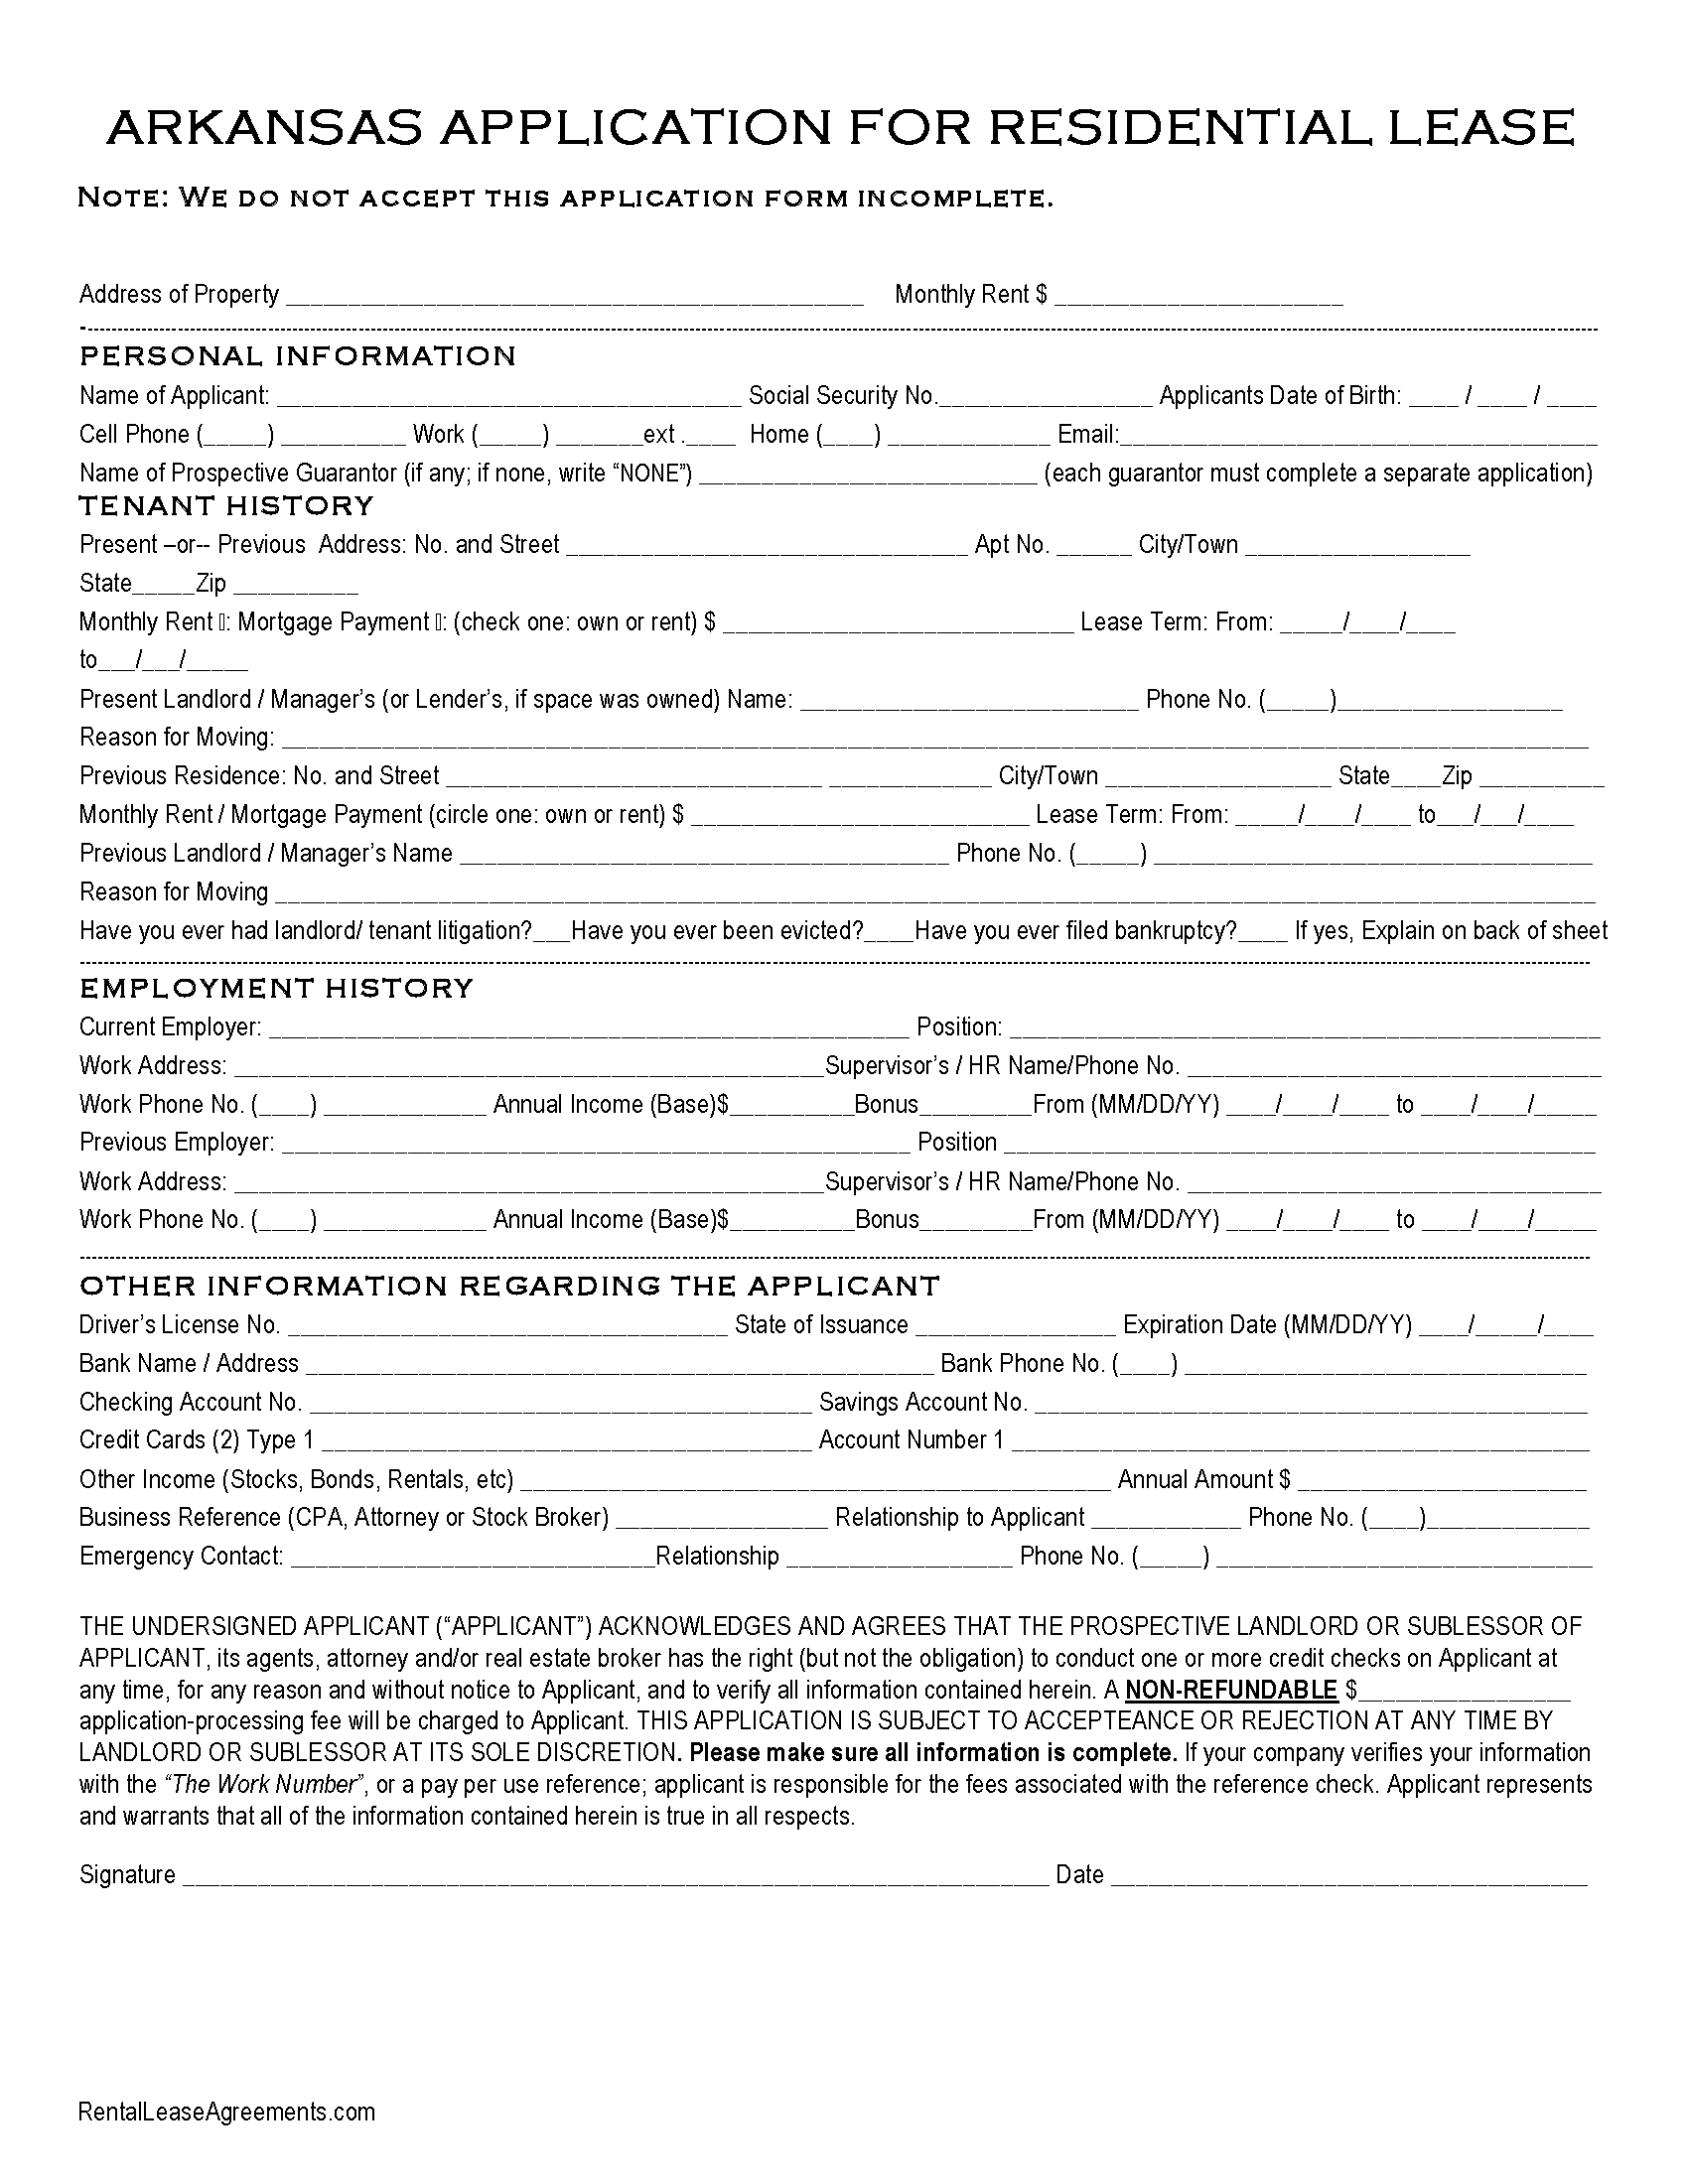 free arkansas rental application form pdf